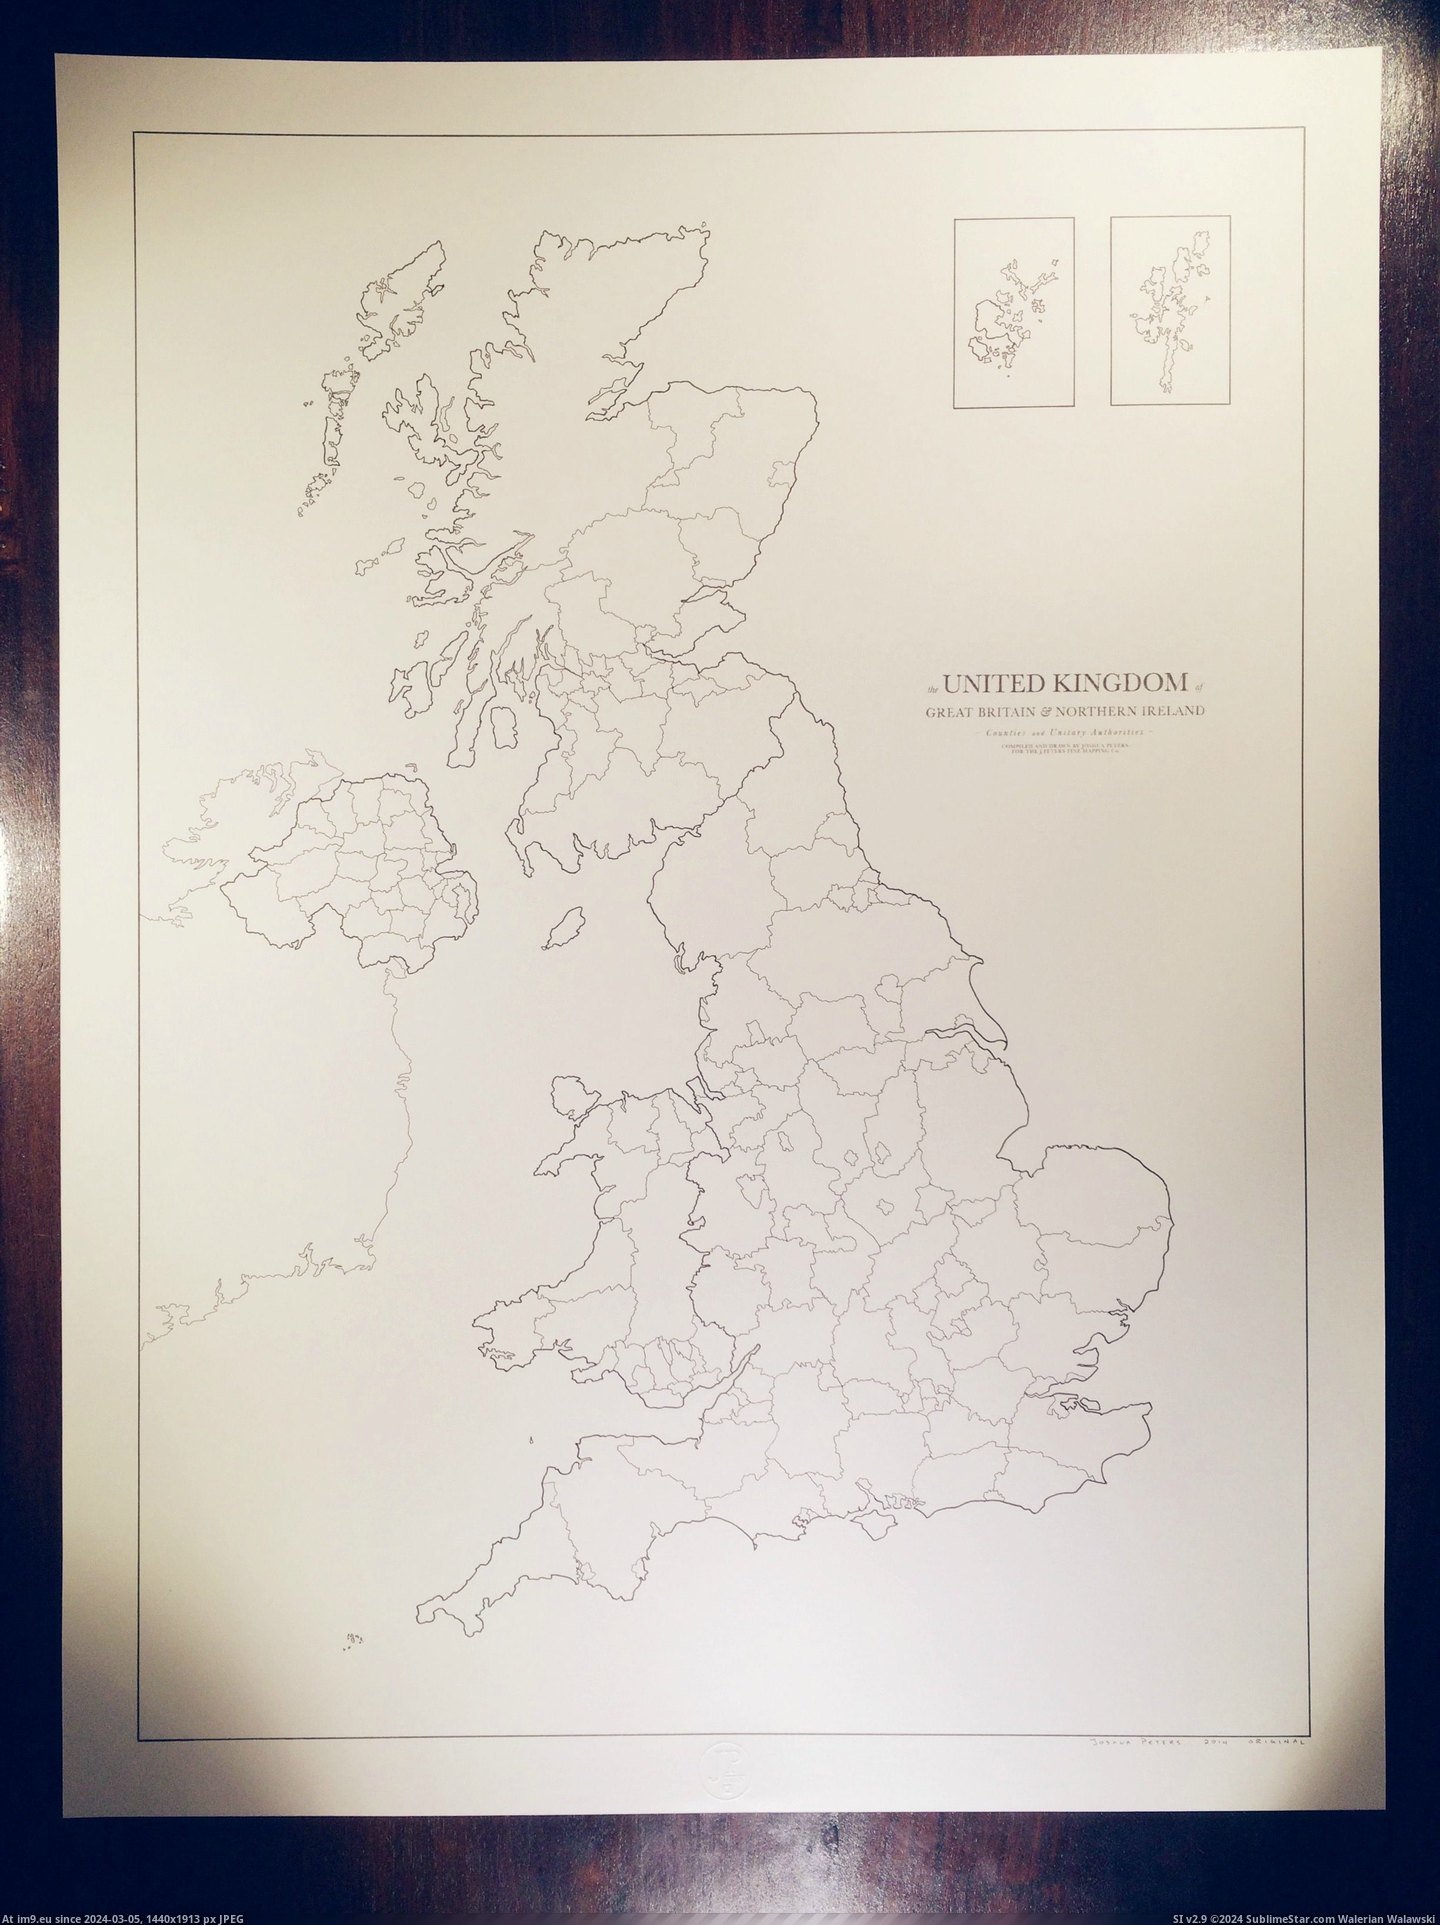 #Great #United #Northern #Britain #Boundaries #Ireland #Kingdom #Counties [Mapporn] The United Kingdom of Great Britain & Northern Ireland: Counties and Unitary Boundaries [2448 × 3264] Pic. (Obraz z album My r/MAPS favs))